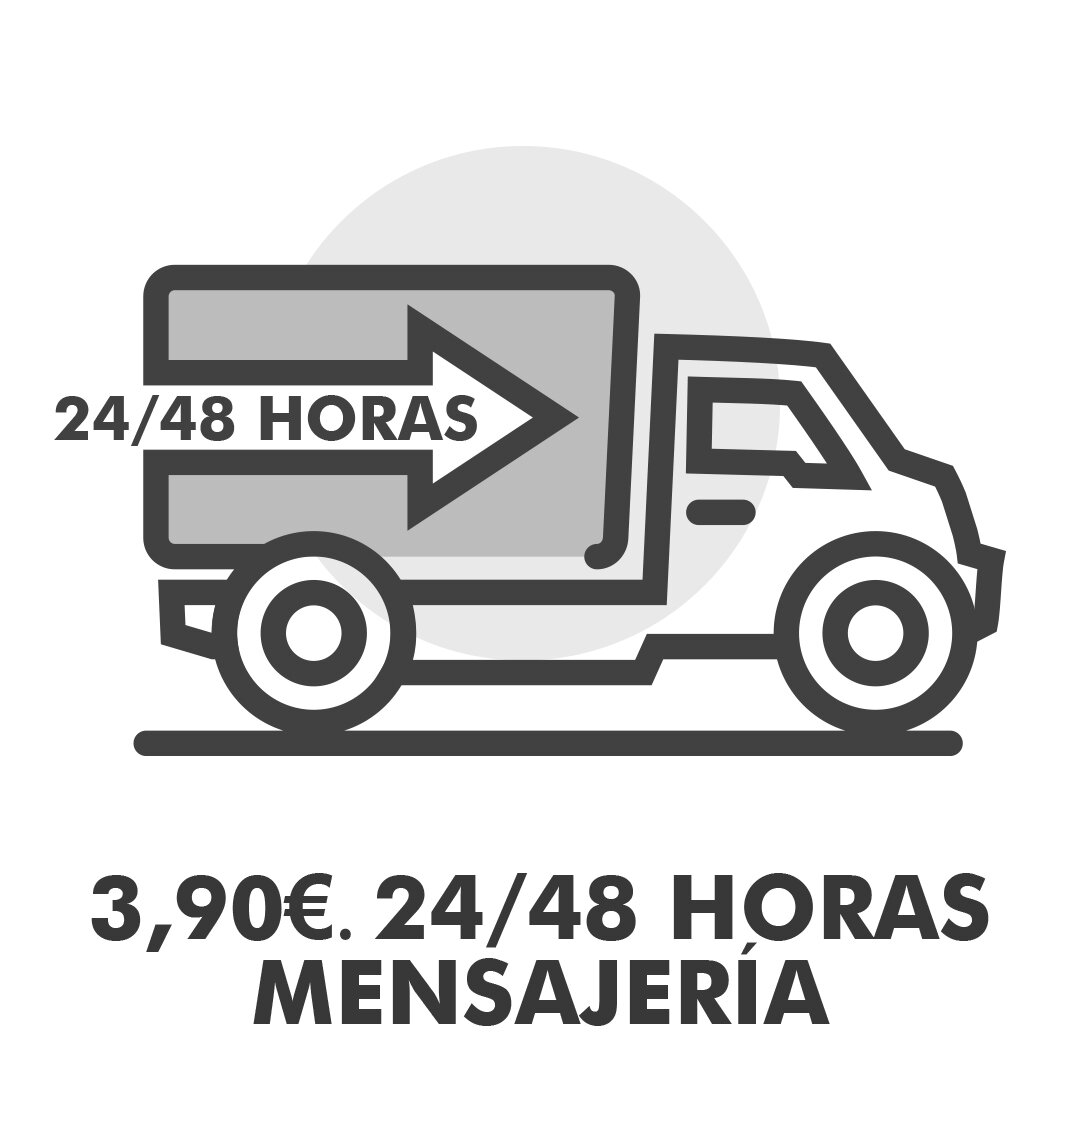 24horas-Mensajeria-Bandaaparte.jpg